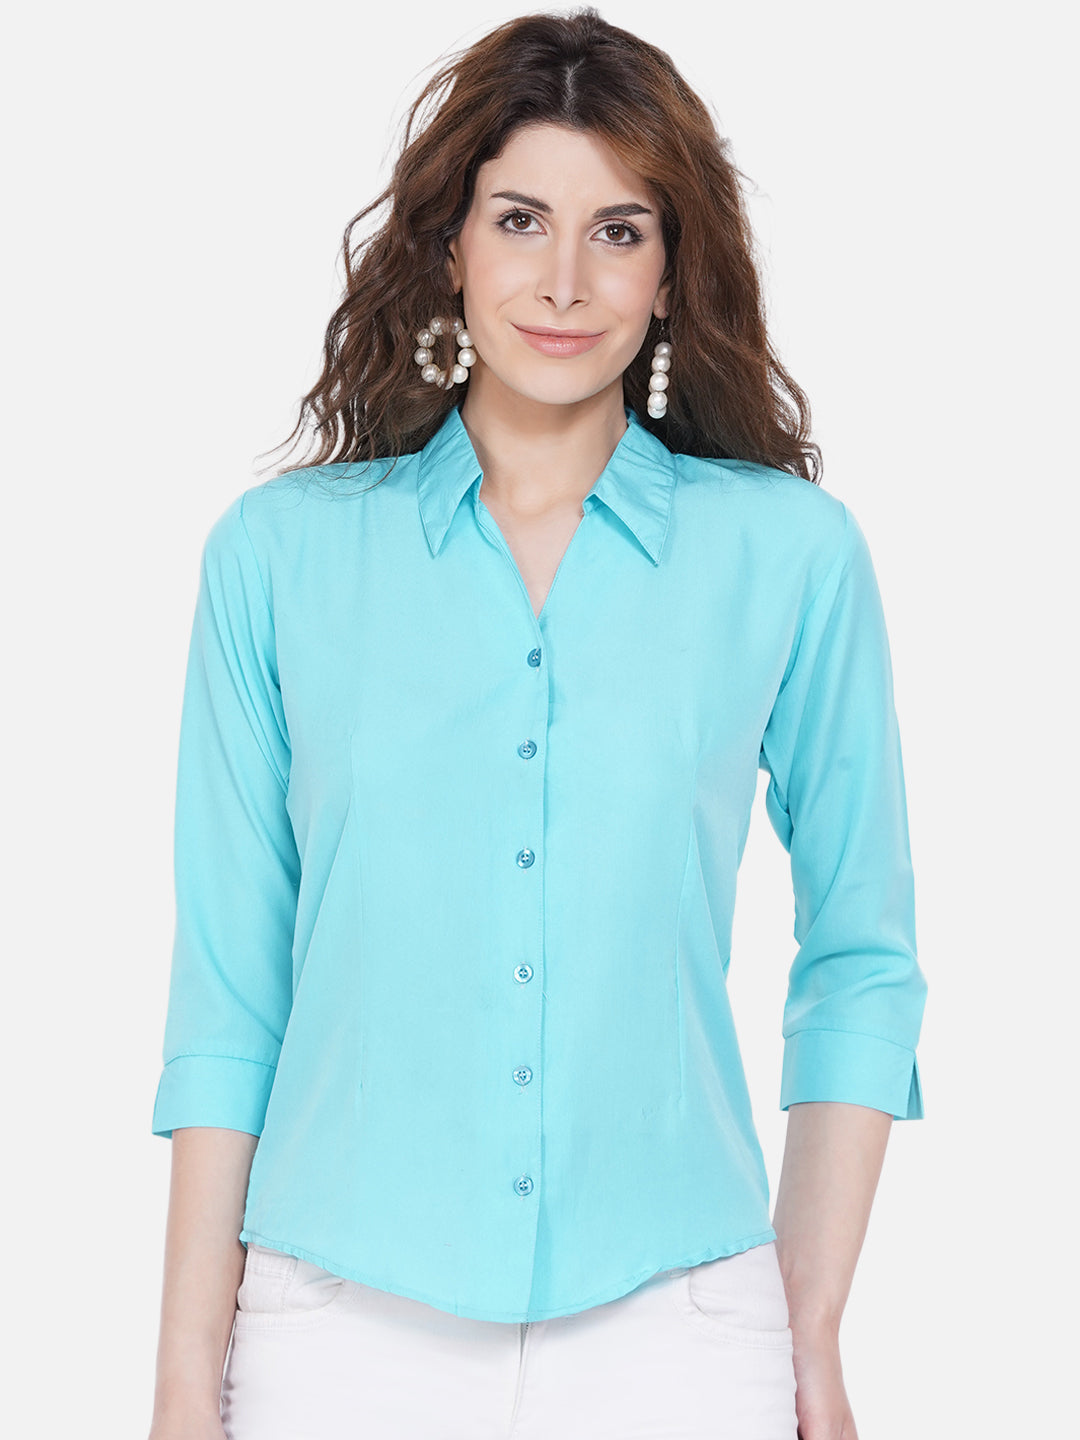 Women's Turquoise Blue Casual Shirt - Wahe-Noor